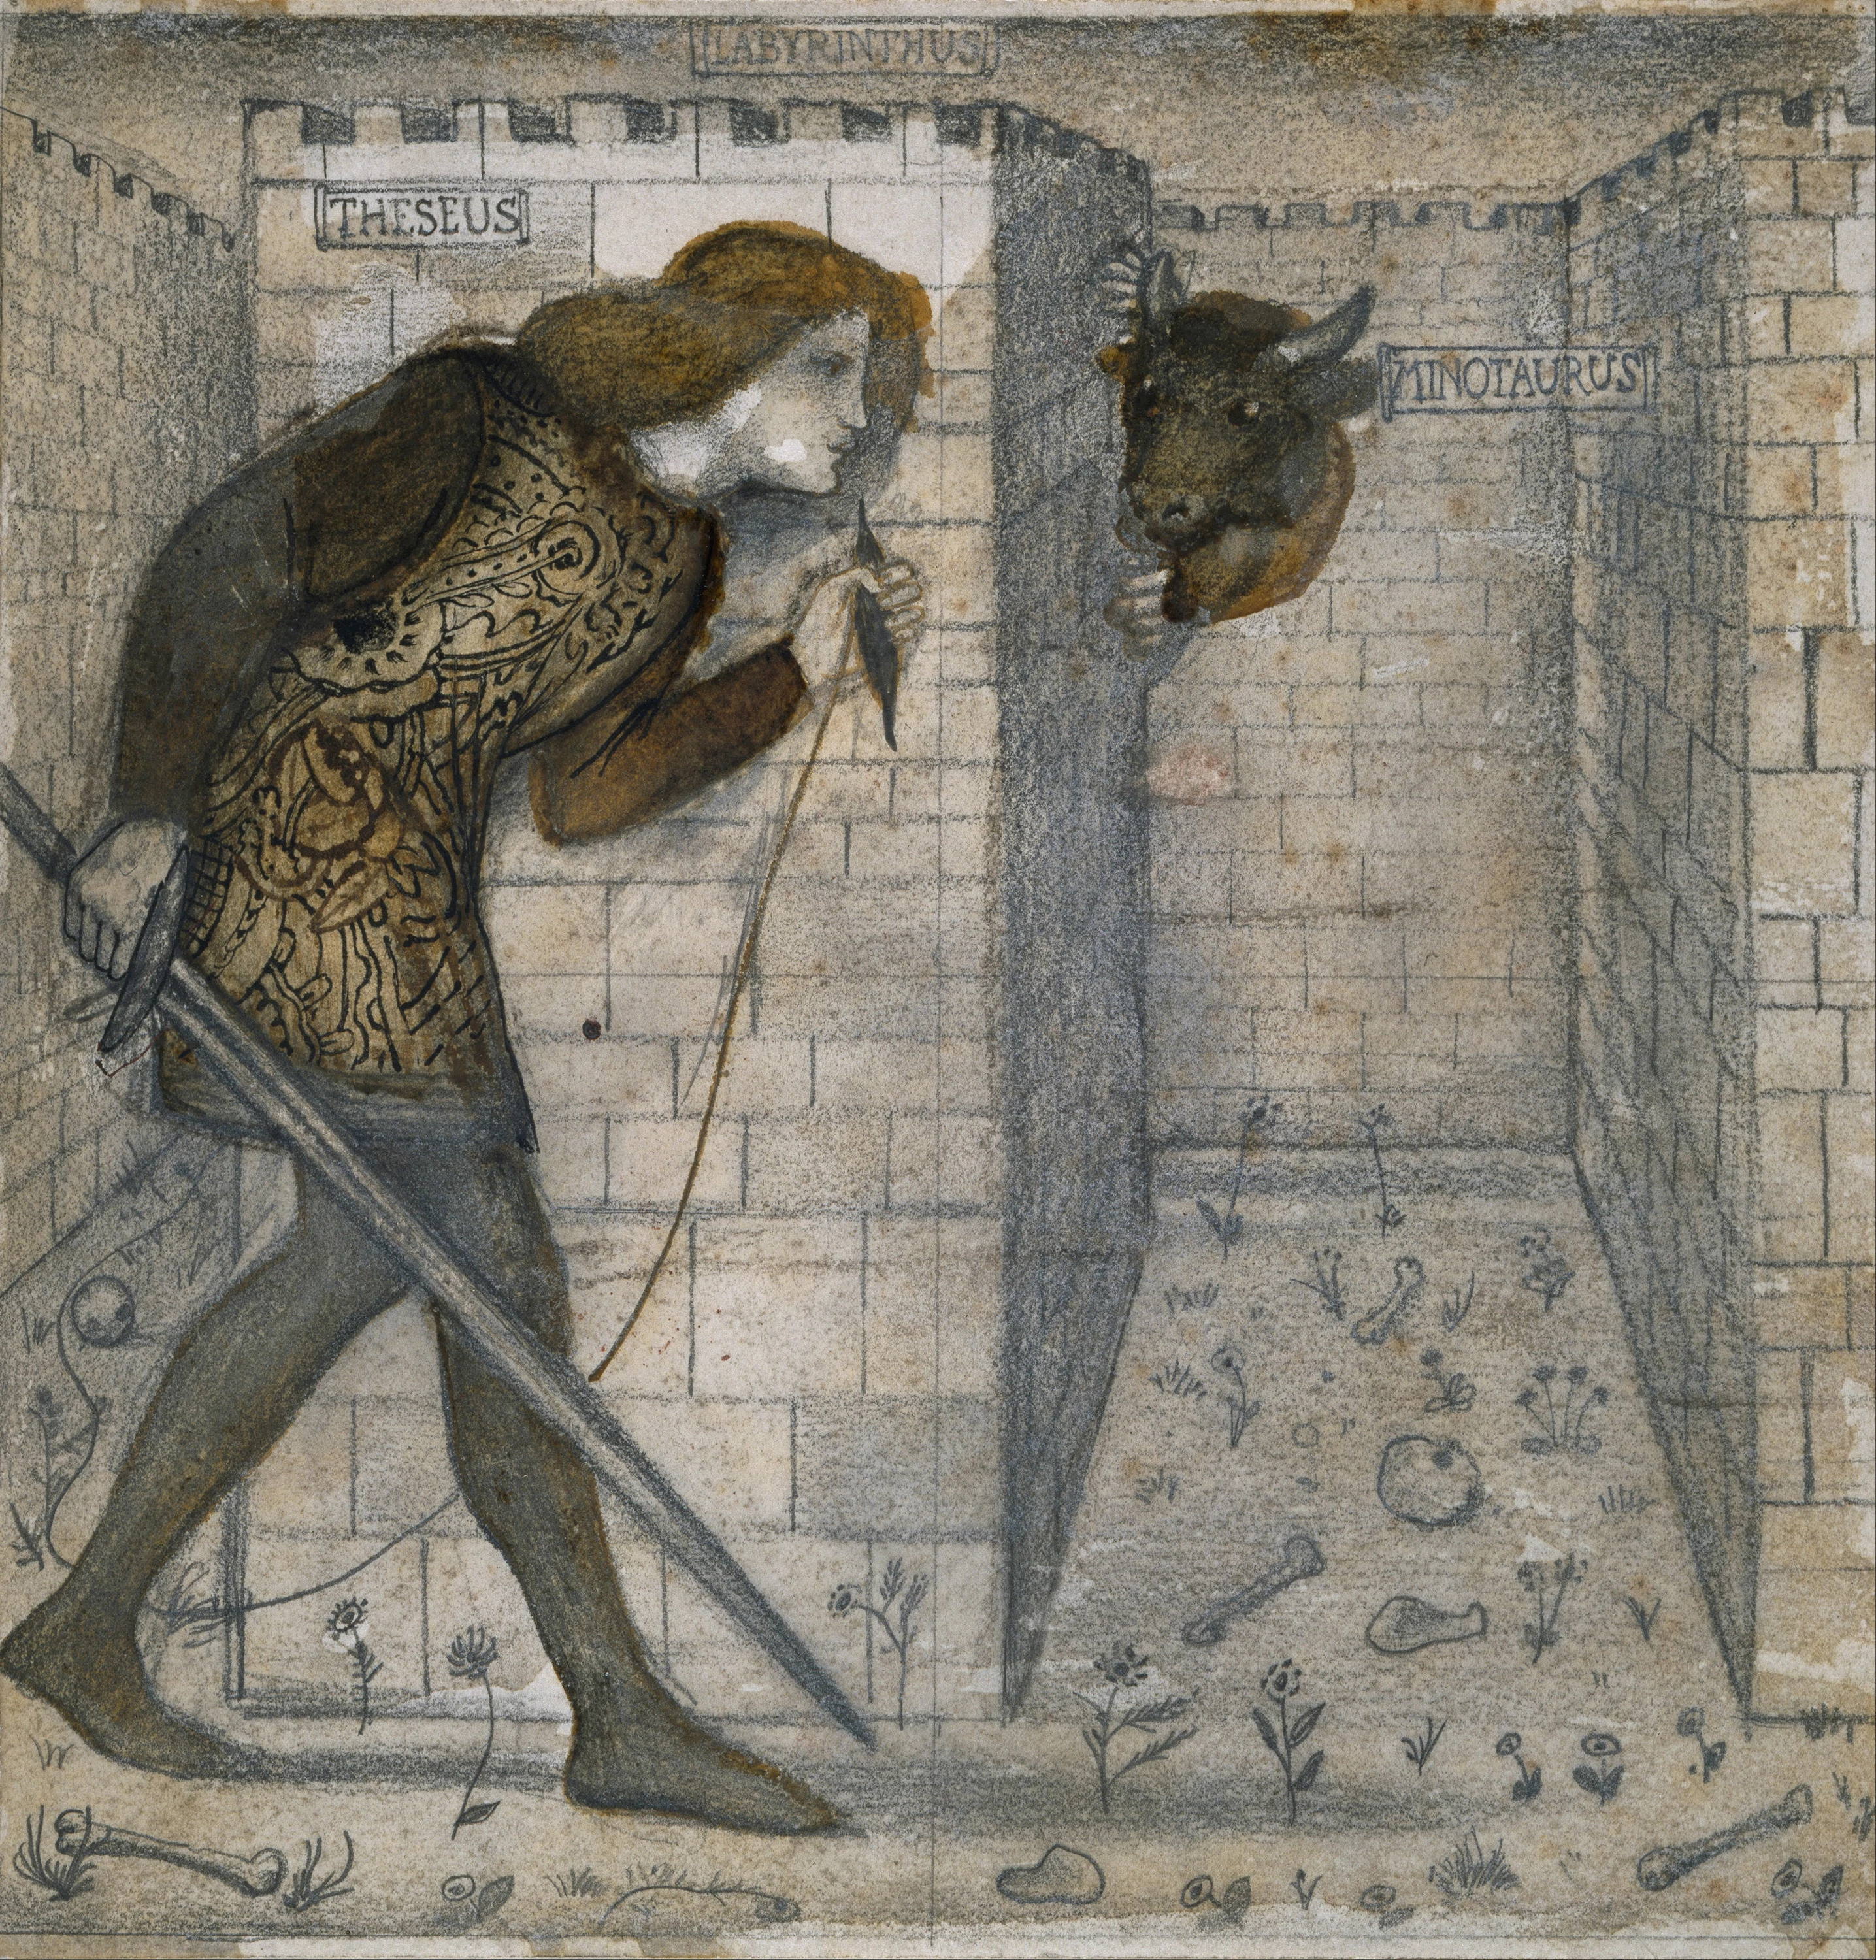 Theseus and the Minotaur, Edward Burne-Jones